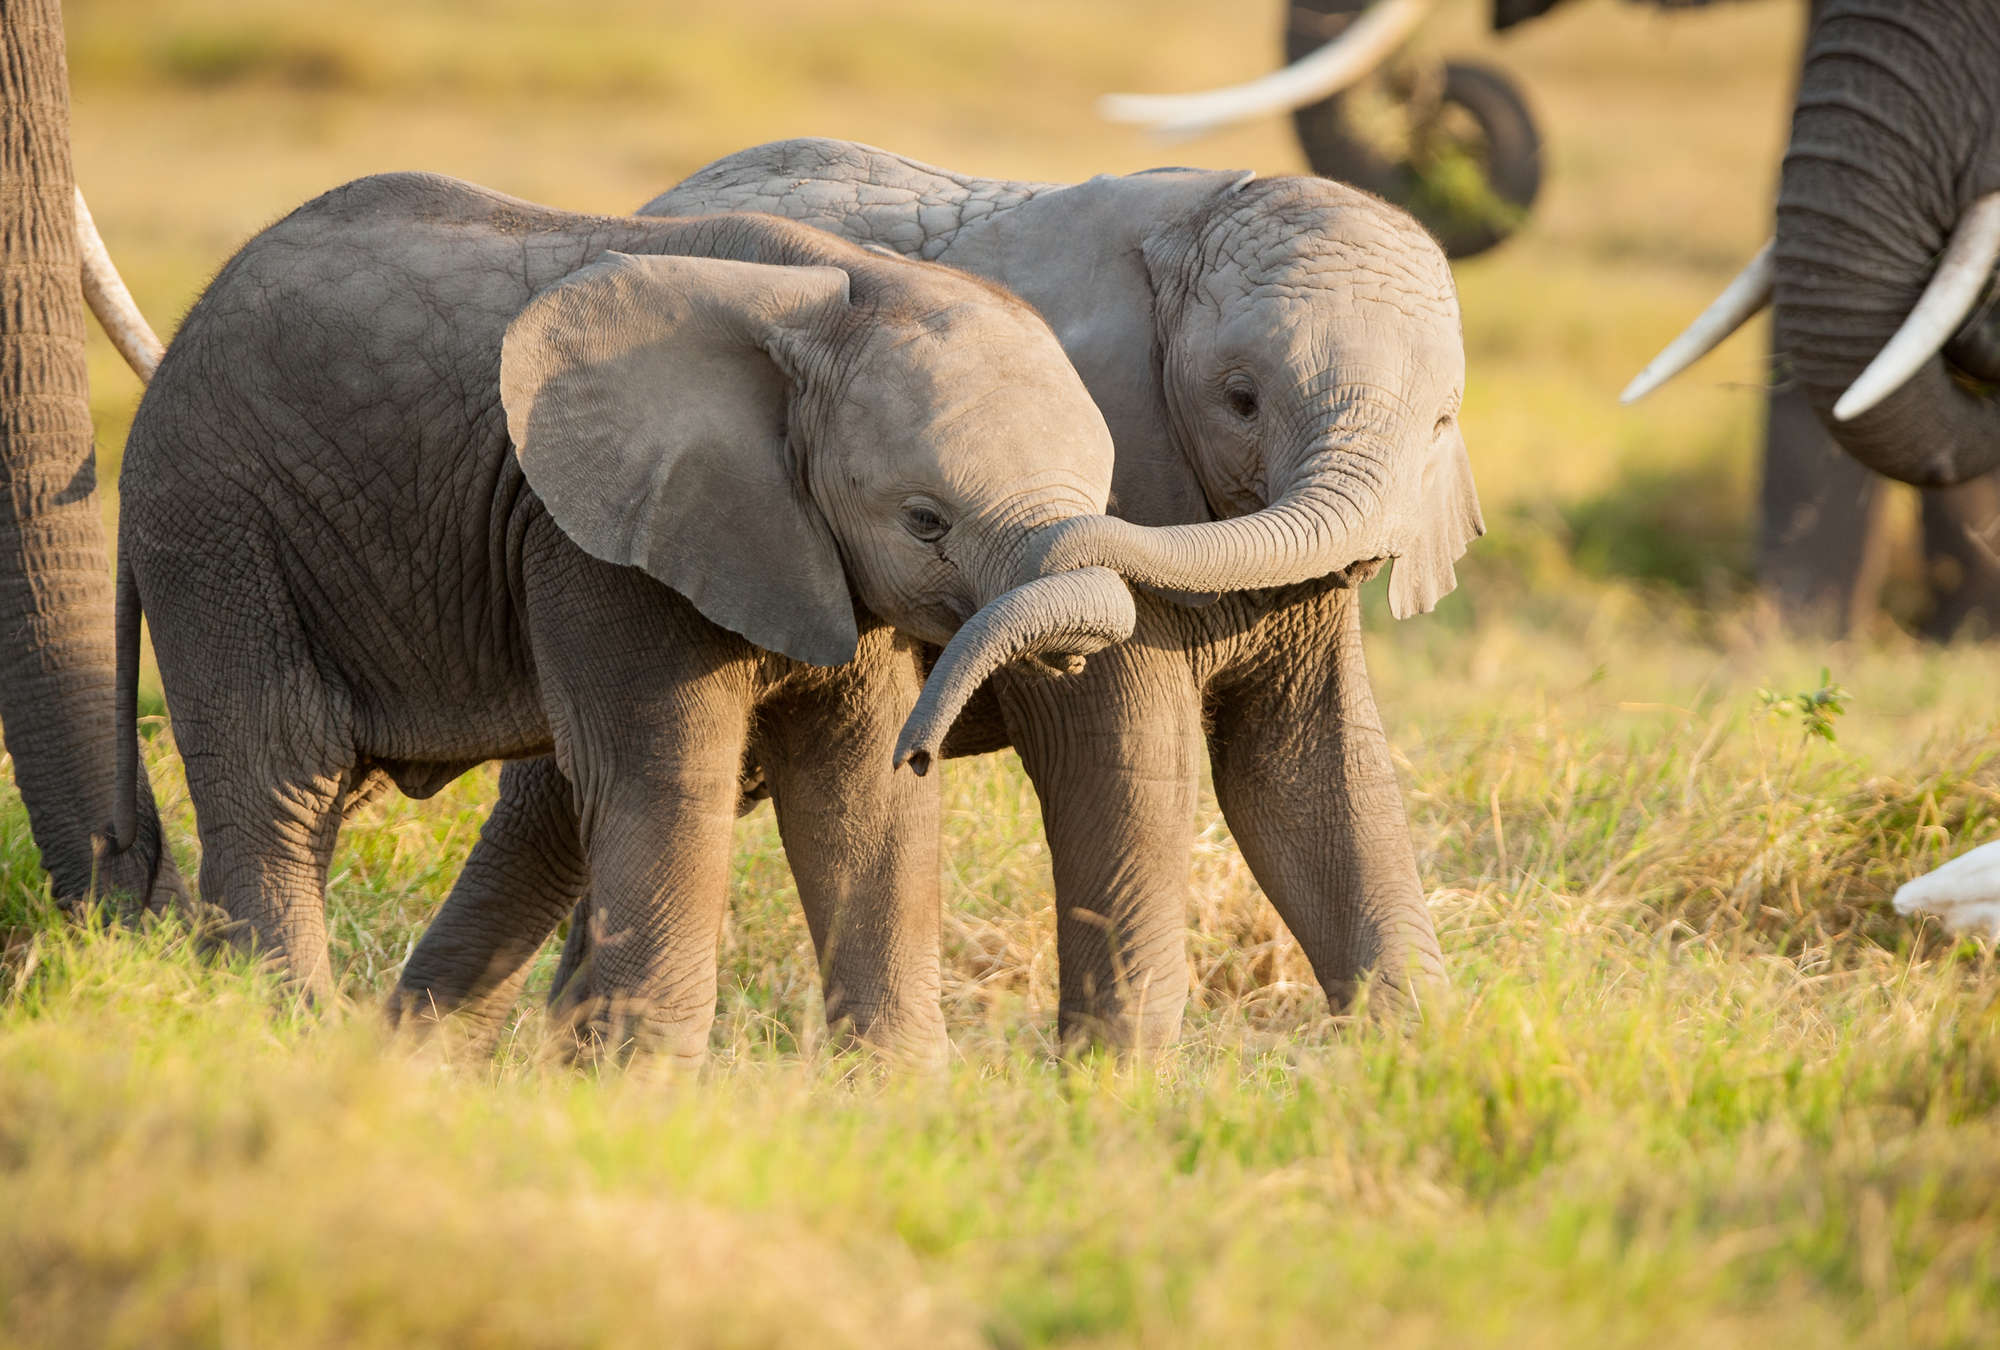             Photo wallpaper baby elephants in the savannah
        